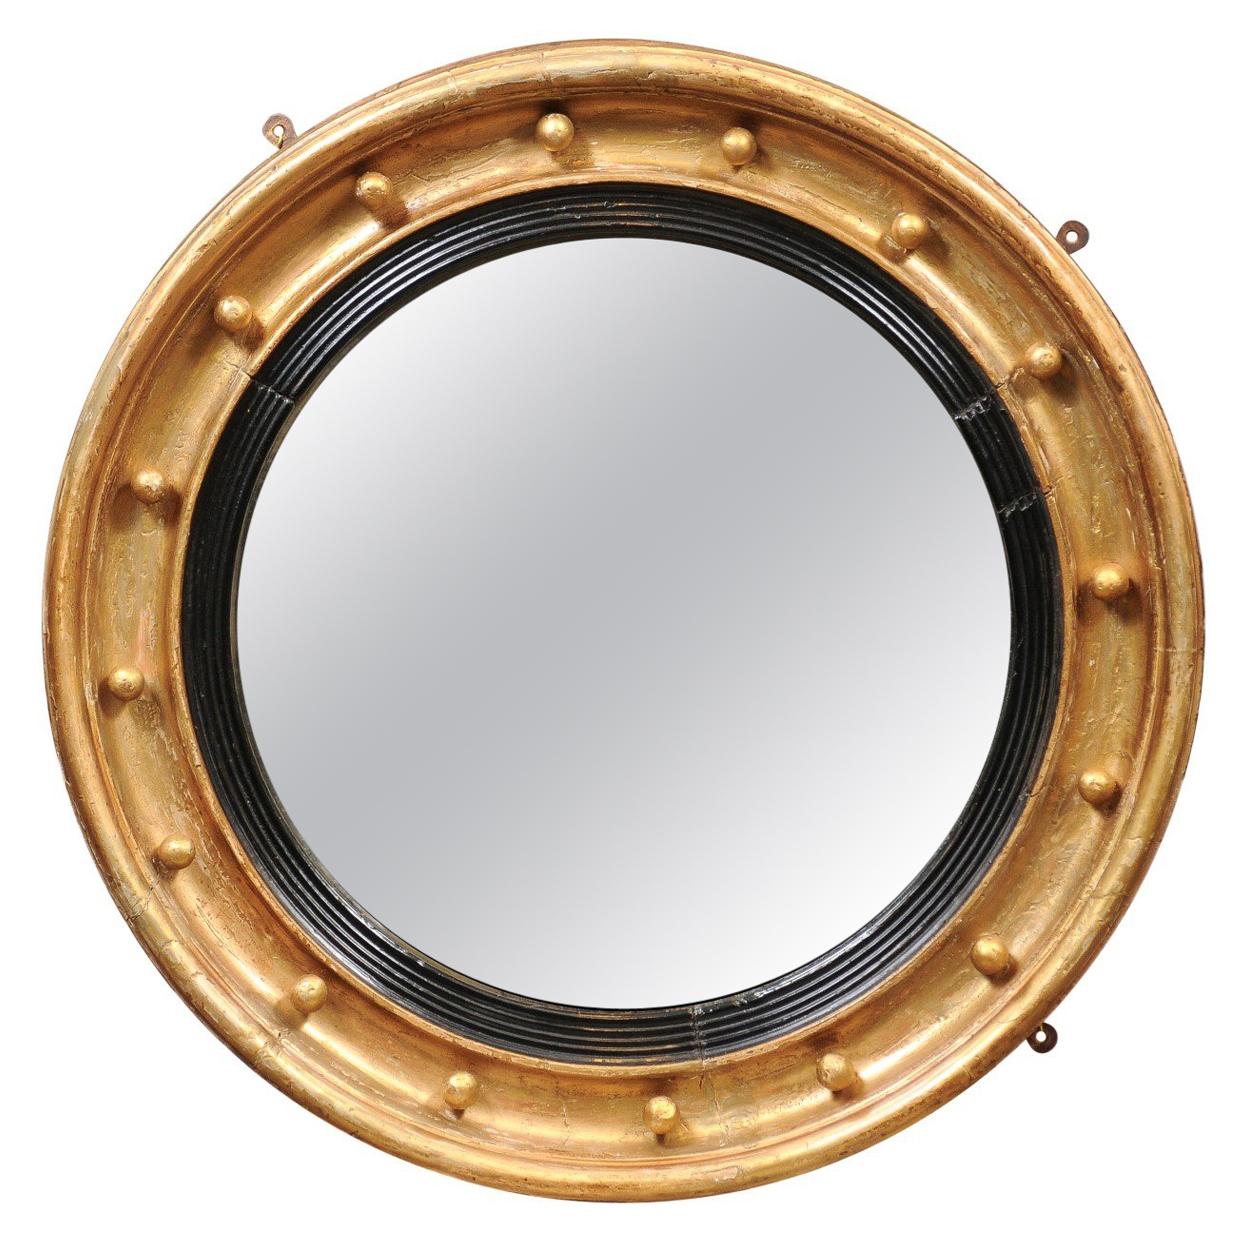 19th Century English Giltwood Bullseye / Convex Mirror with Ebonized Detail